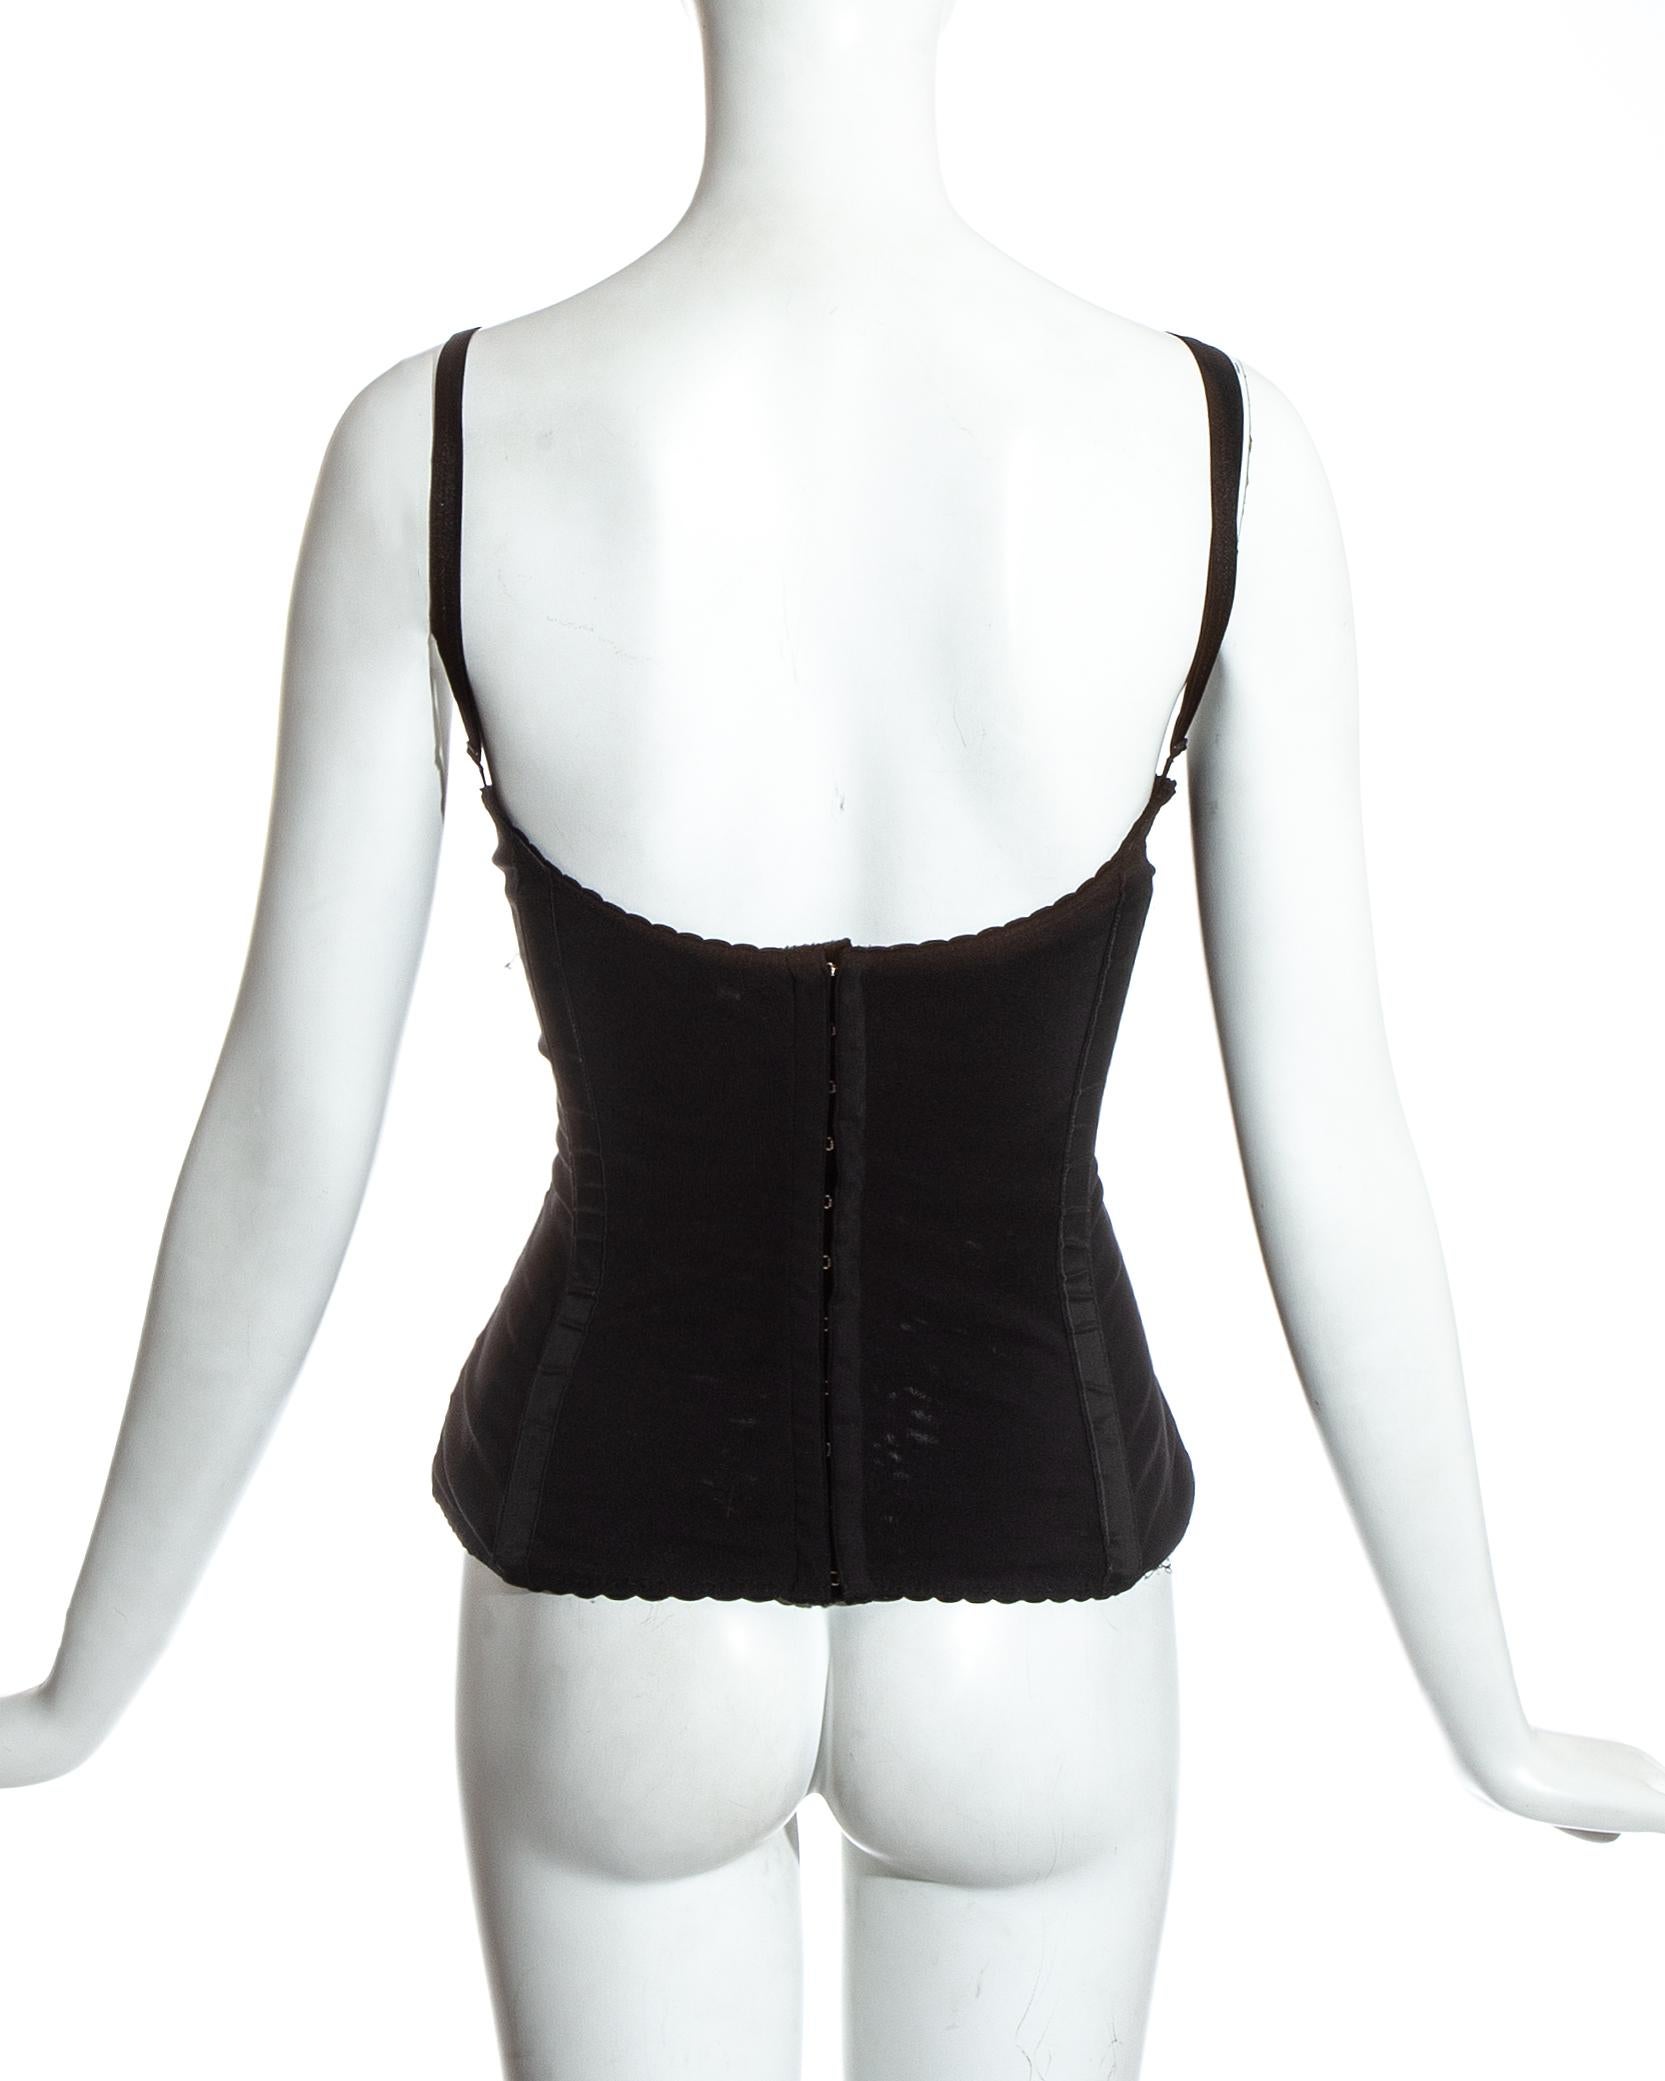 Women's Dolce & Gabbana black satin boned evening corset, c. 1990s